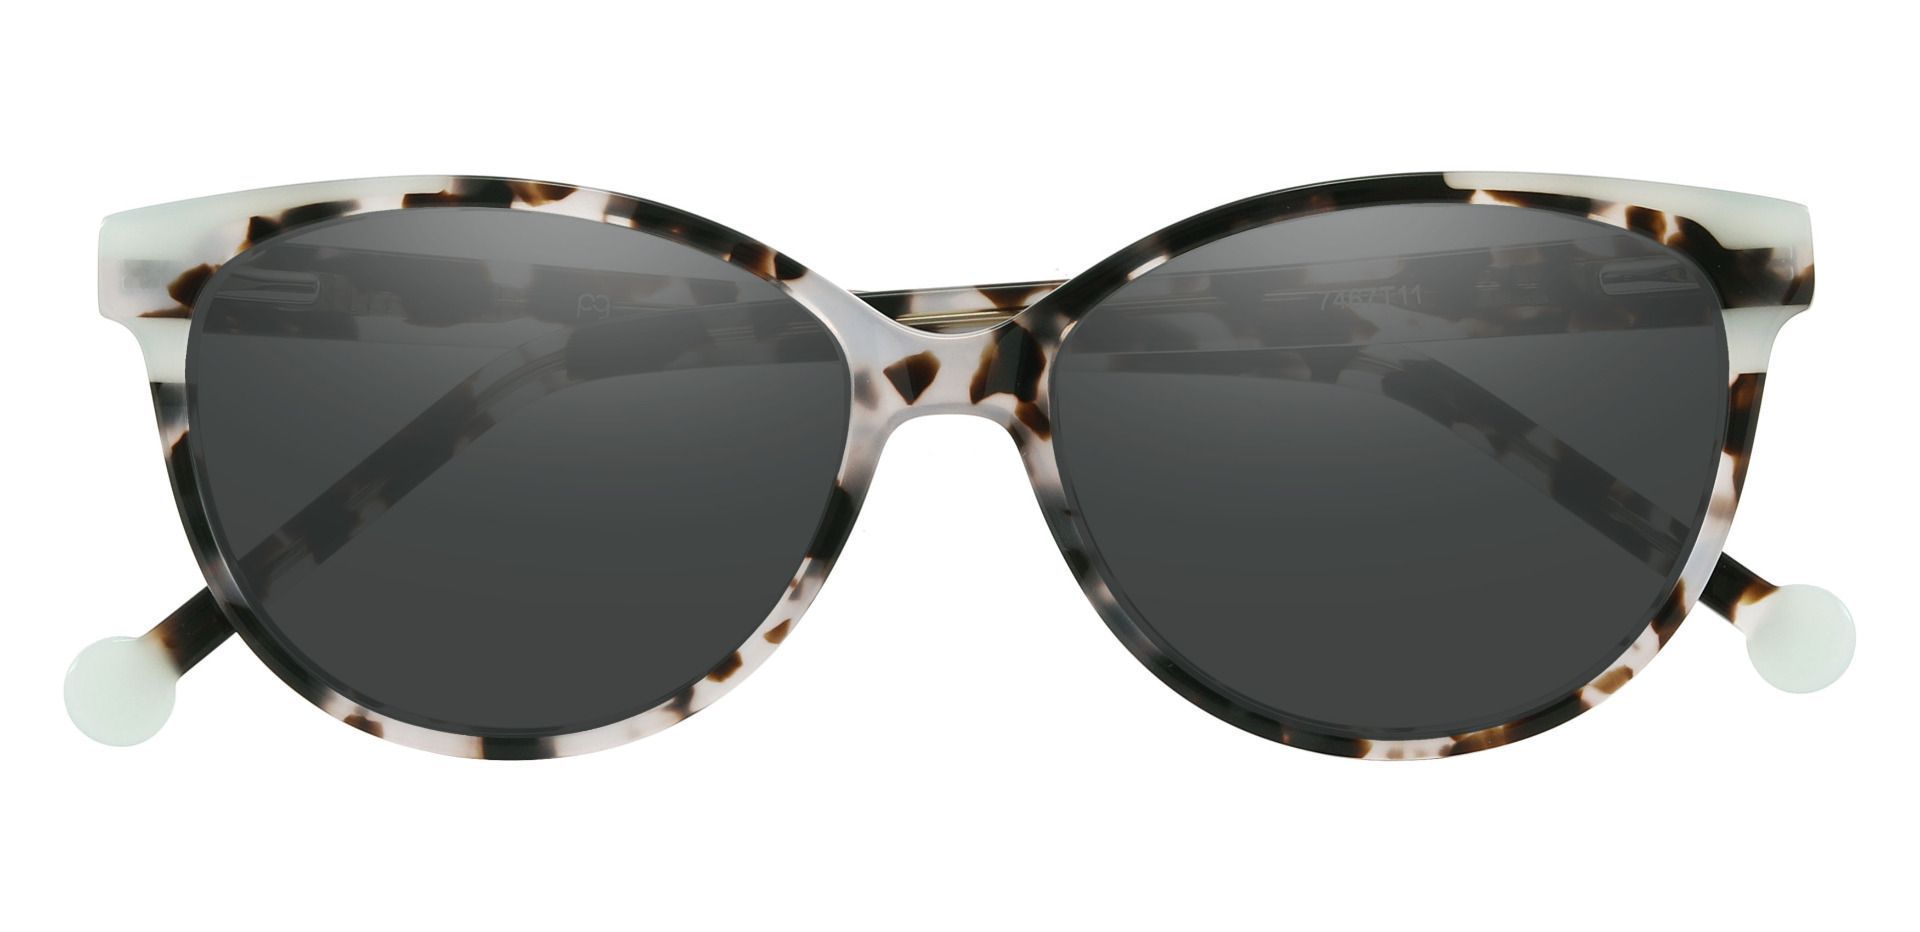 Wisdom Cat Eye Progressive Sunglasses - Multi Color Frame With Gray Lenses